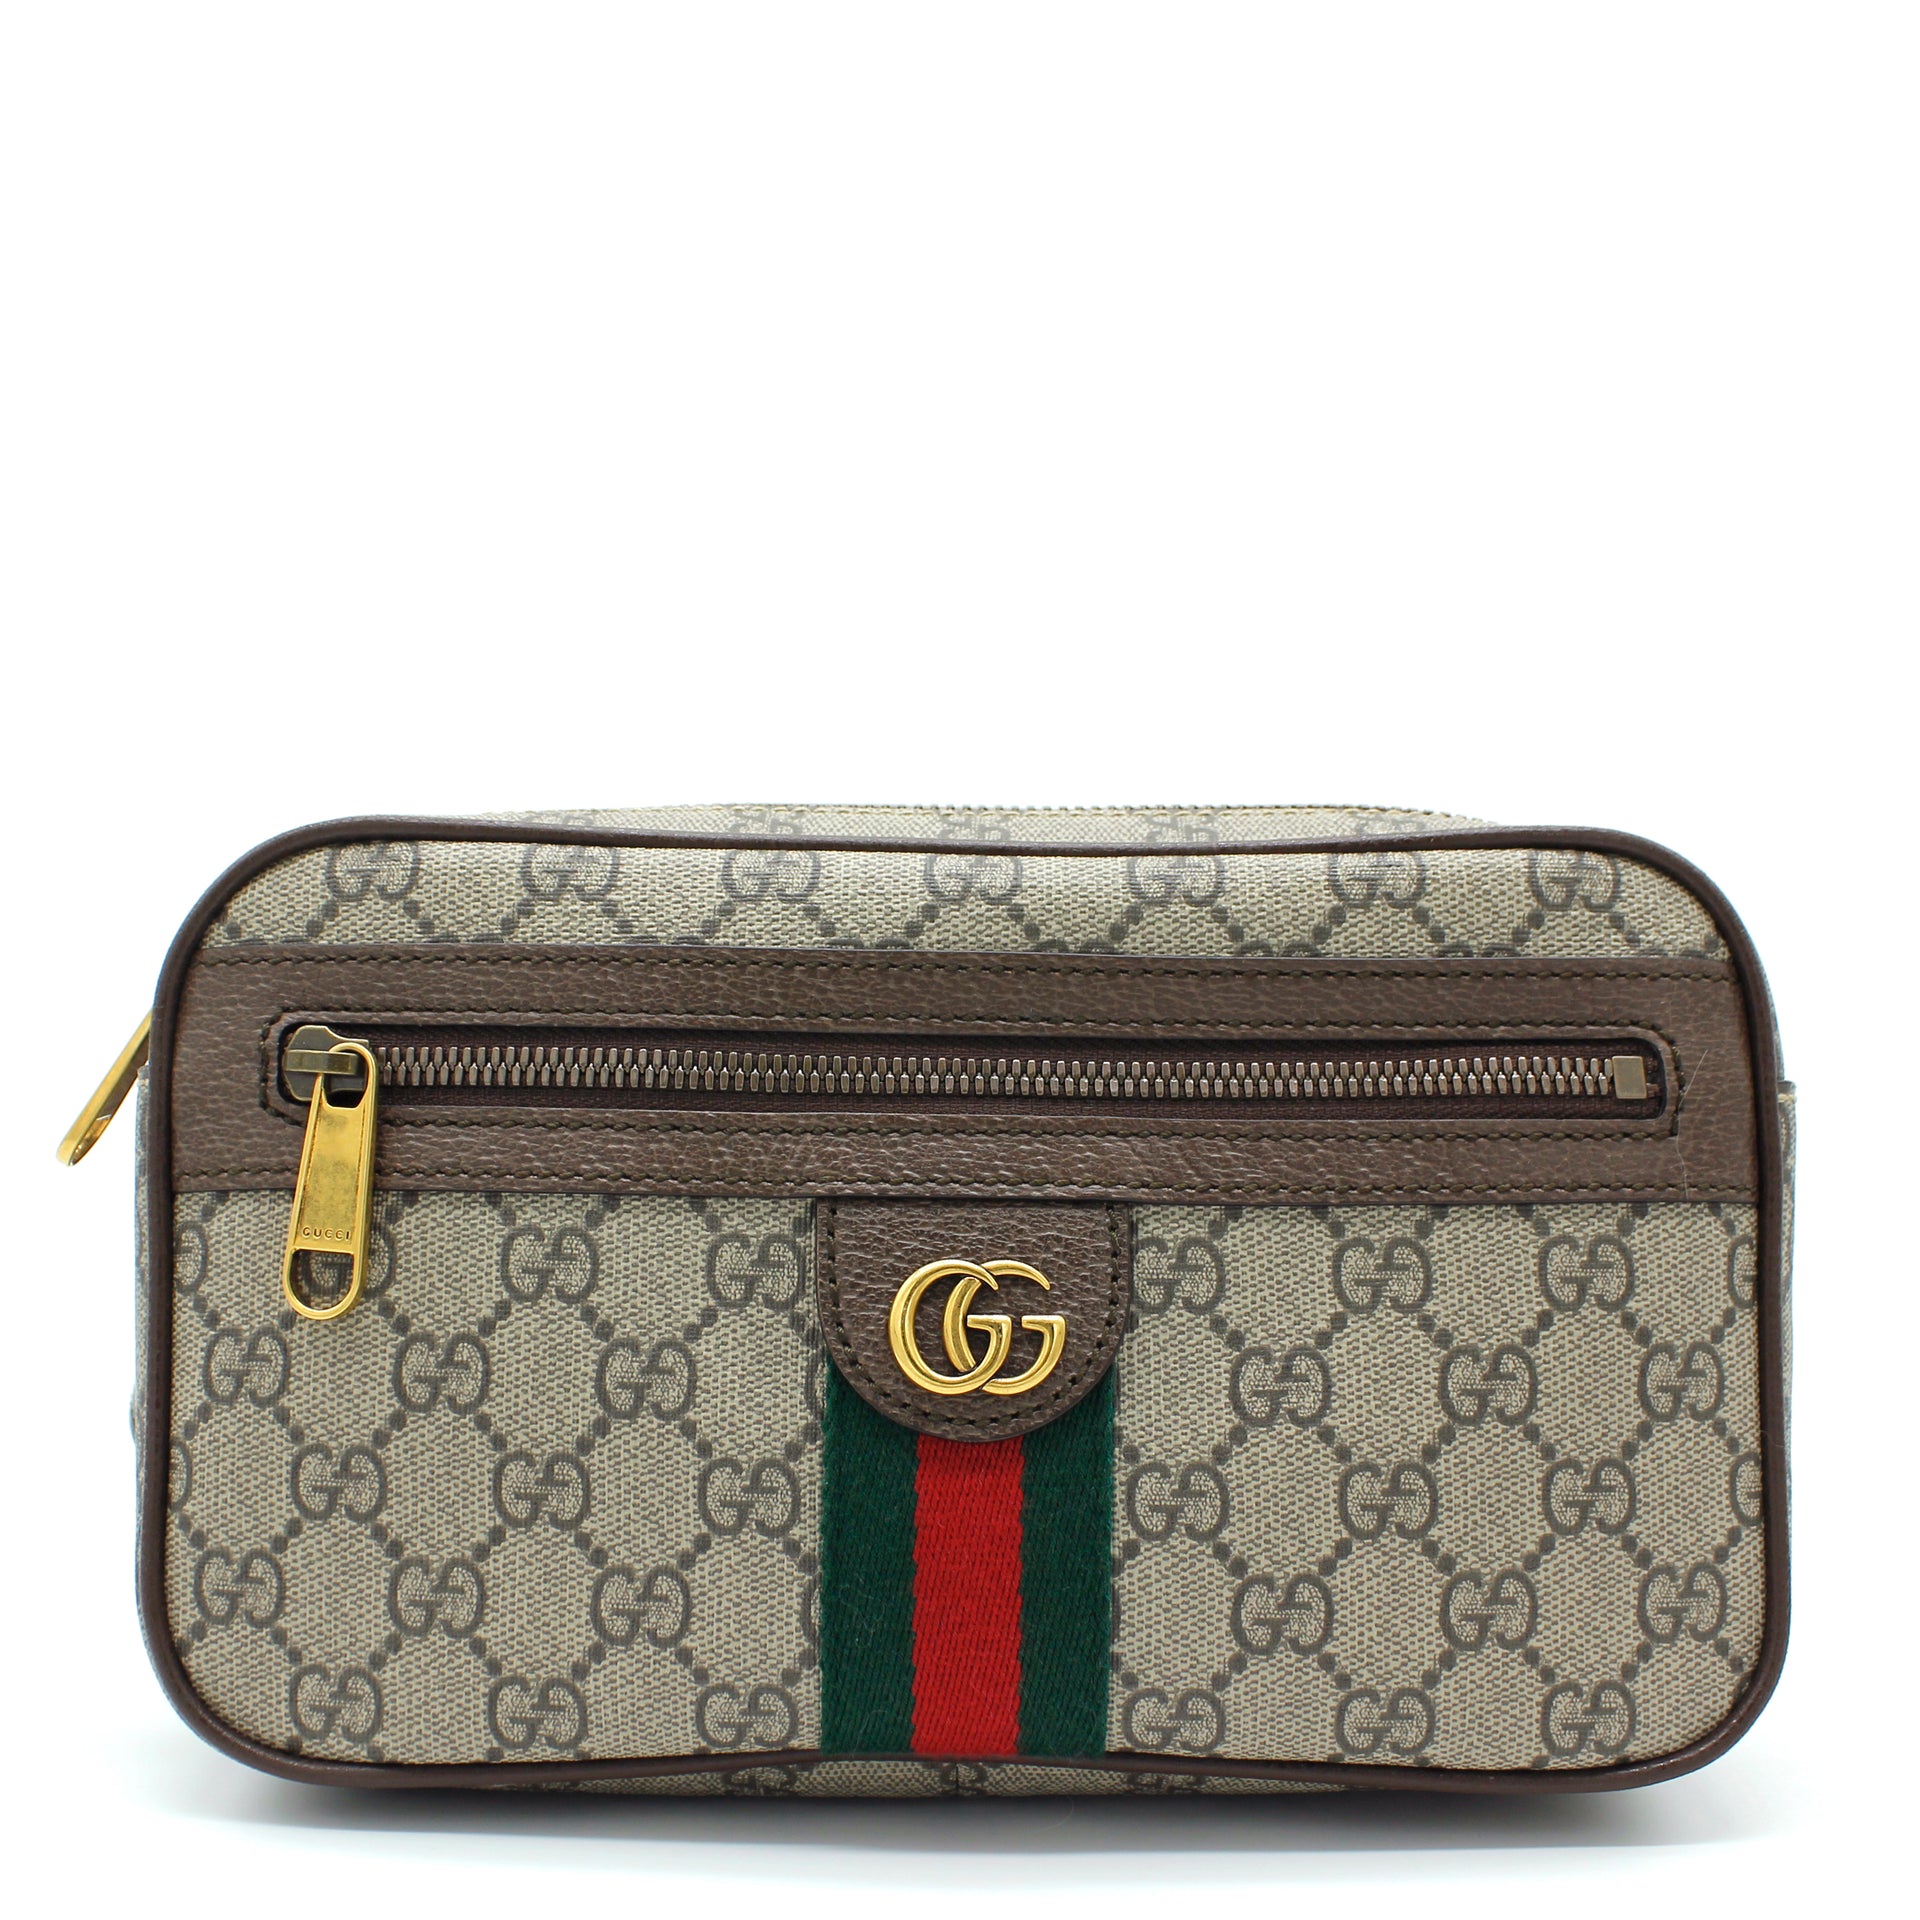 Gucci GG Supreme Ophidia Web Belt Bag Brown